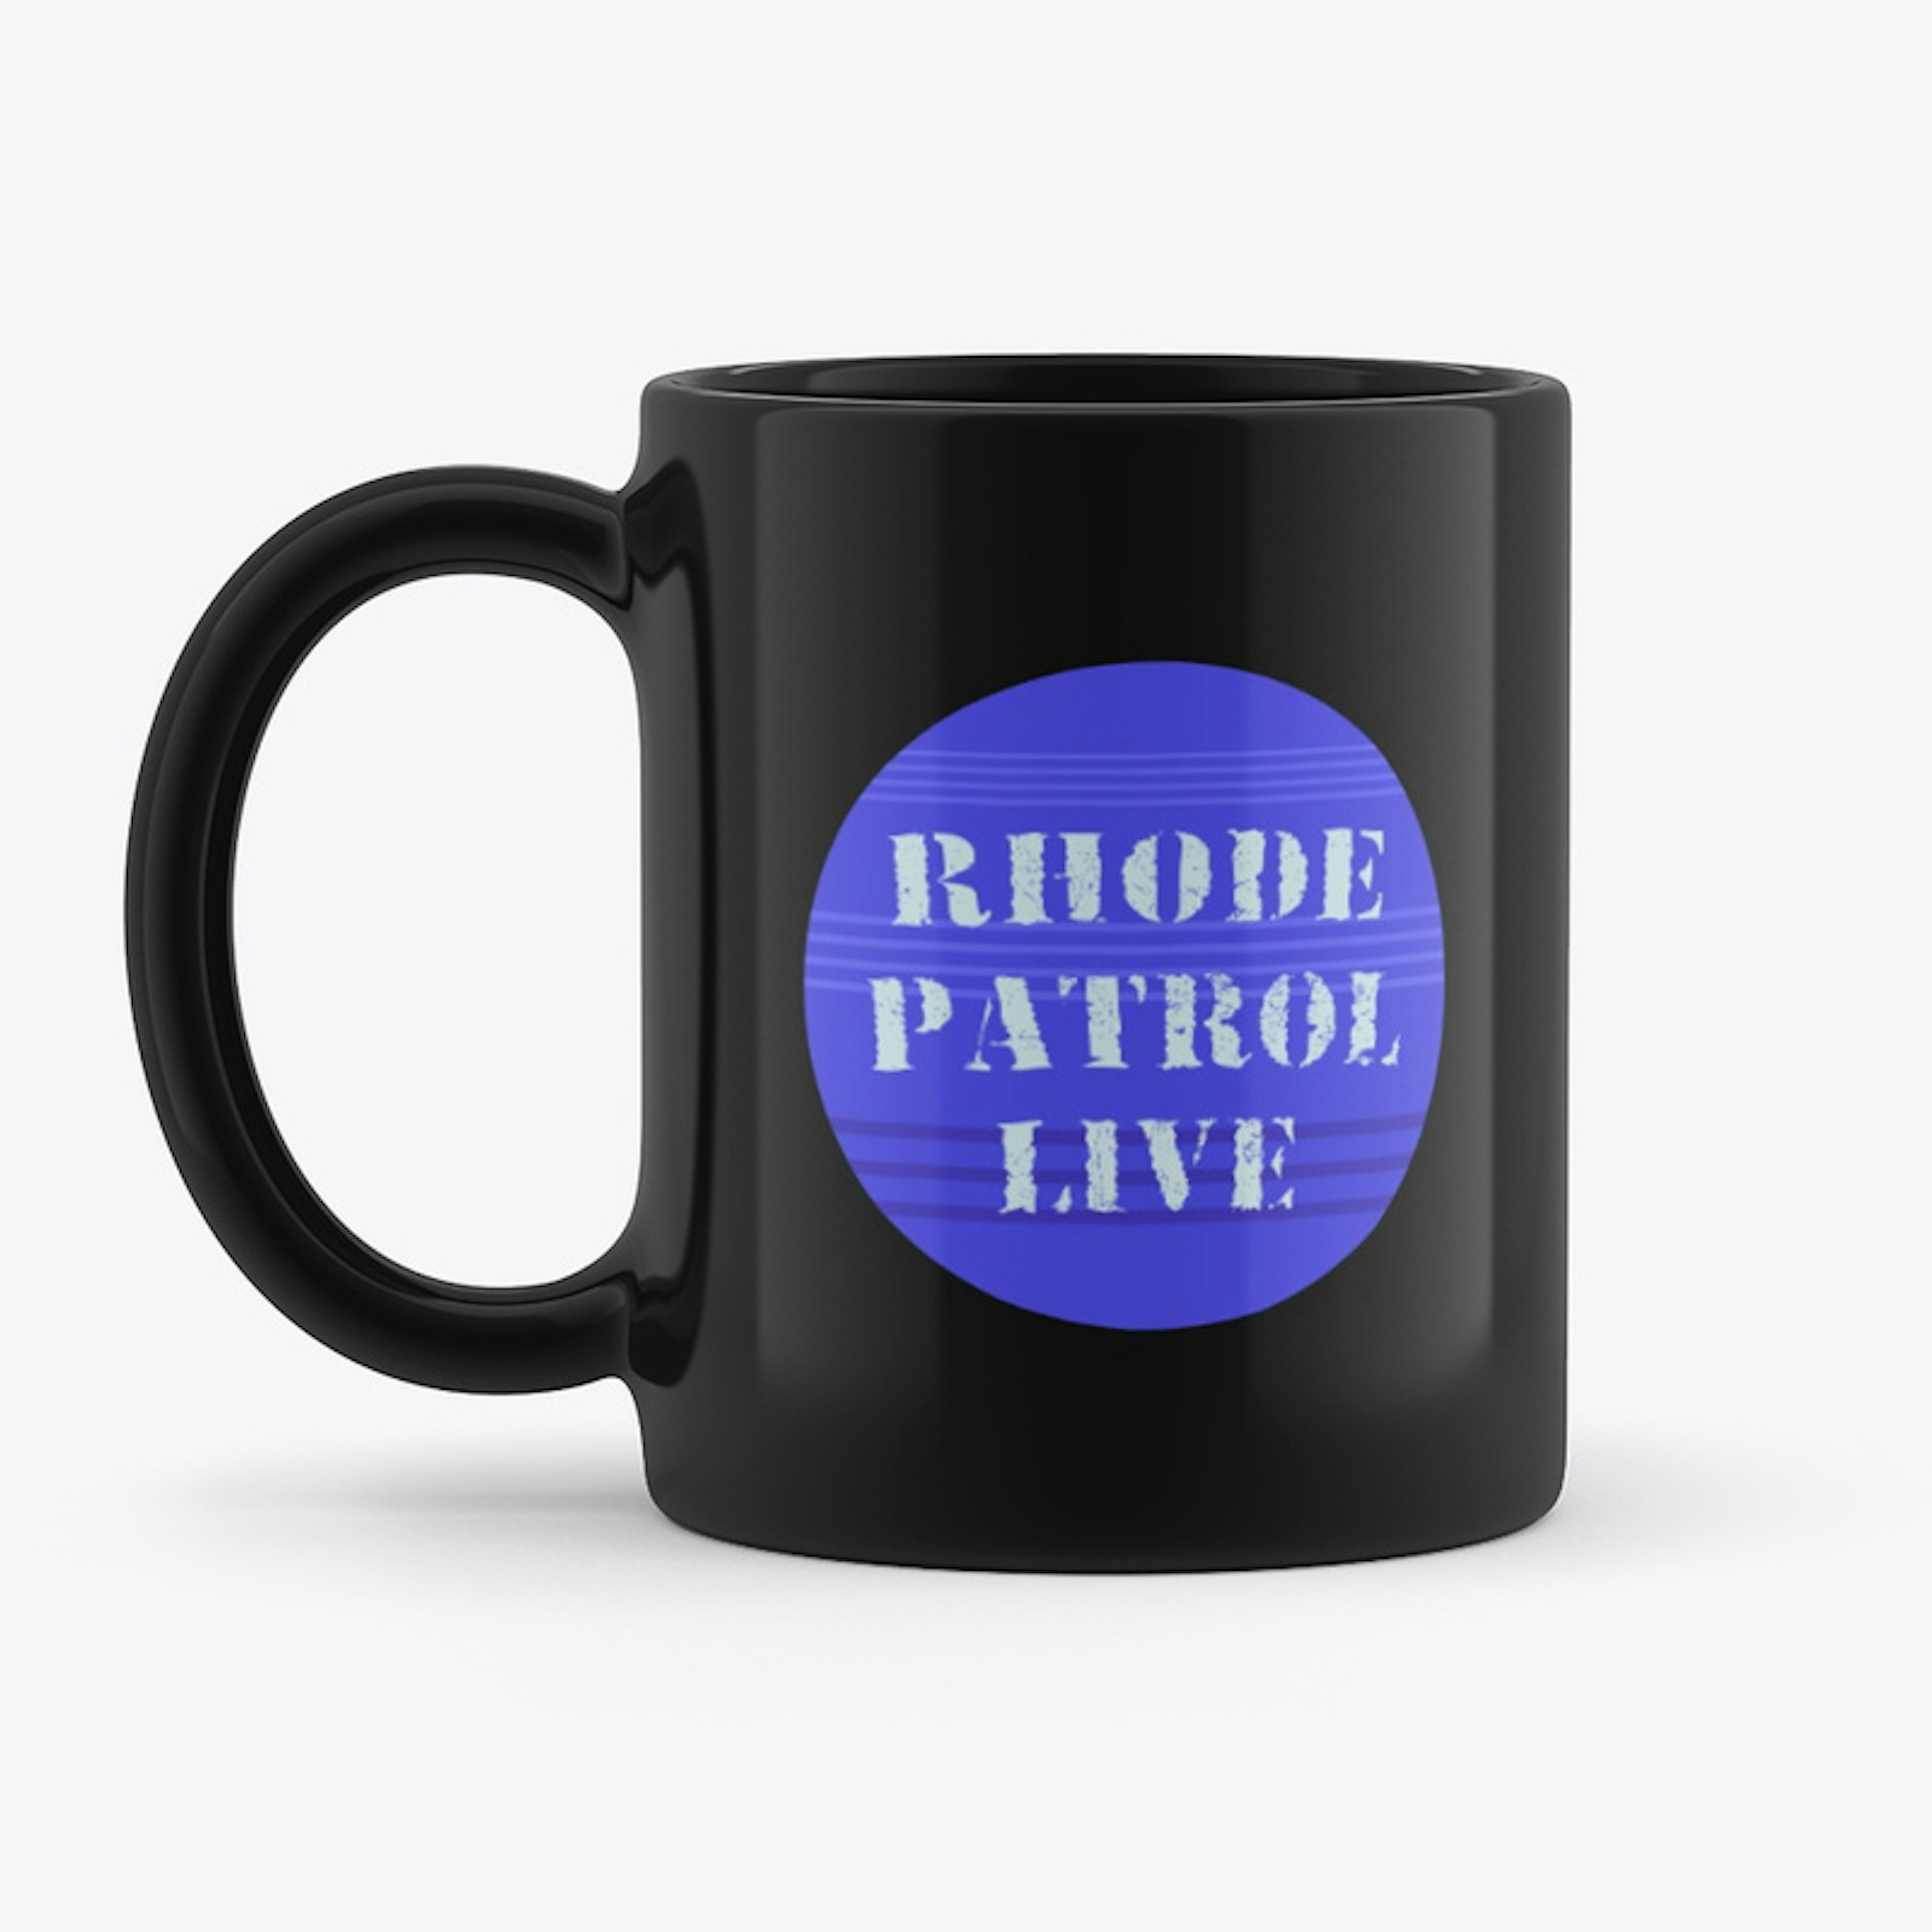 Rhode Patrol Live 2